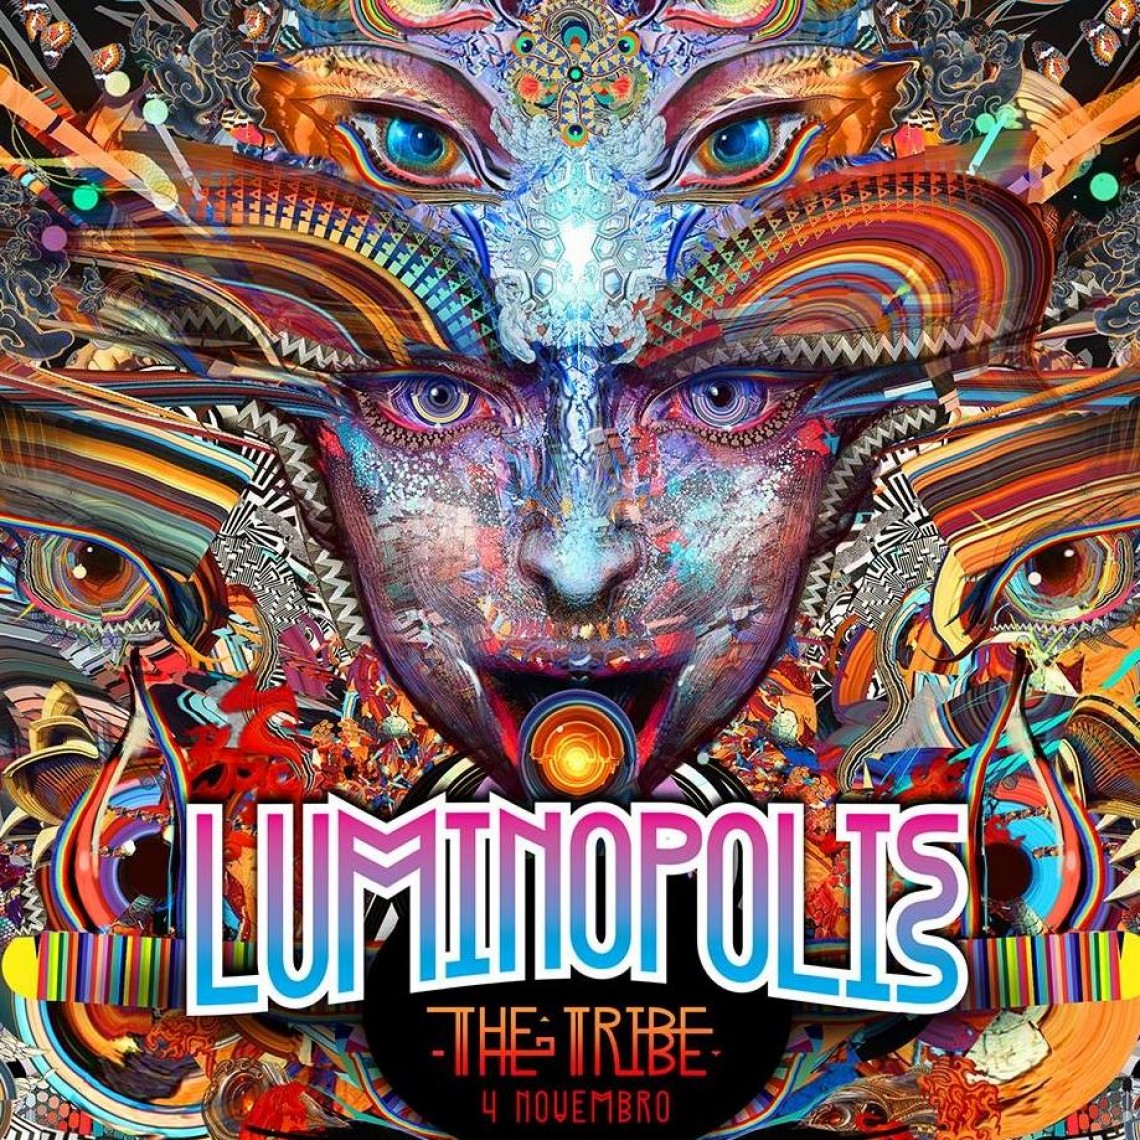 Luminopolis - The Tribe